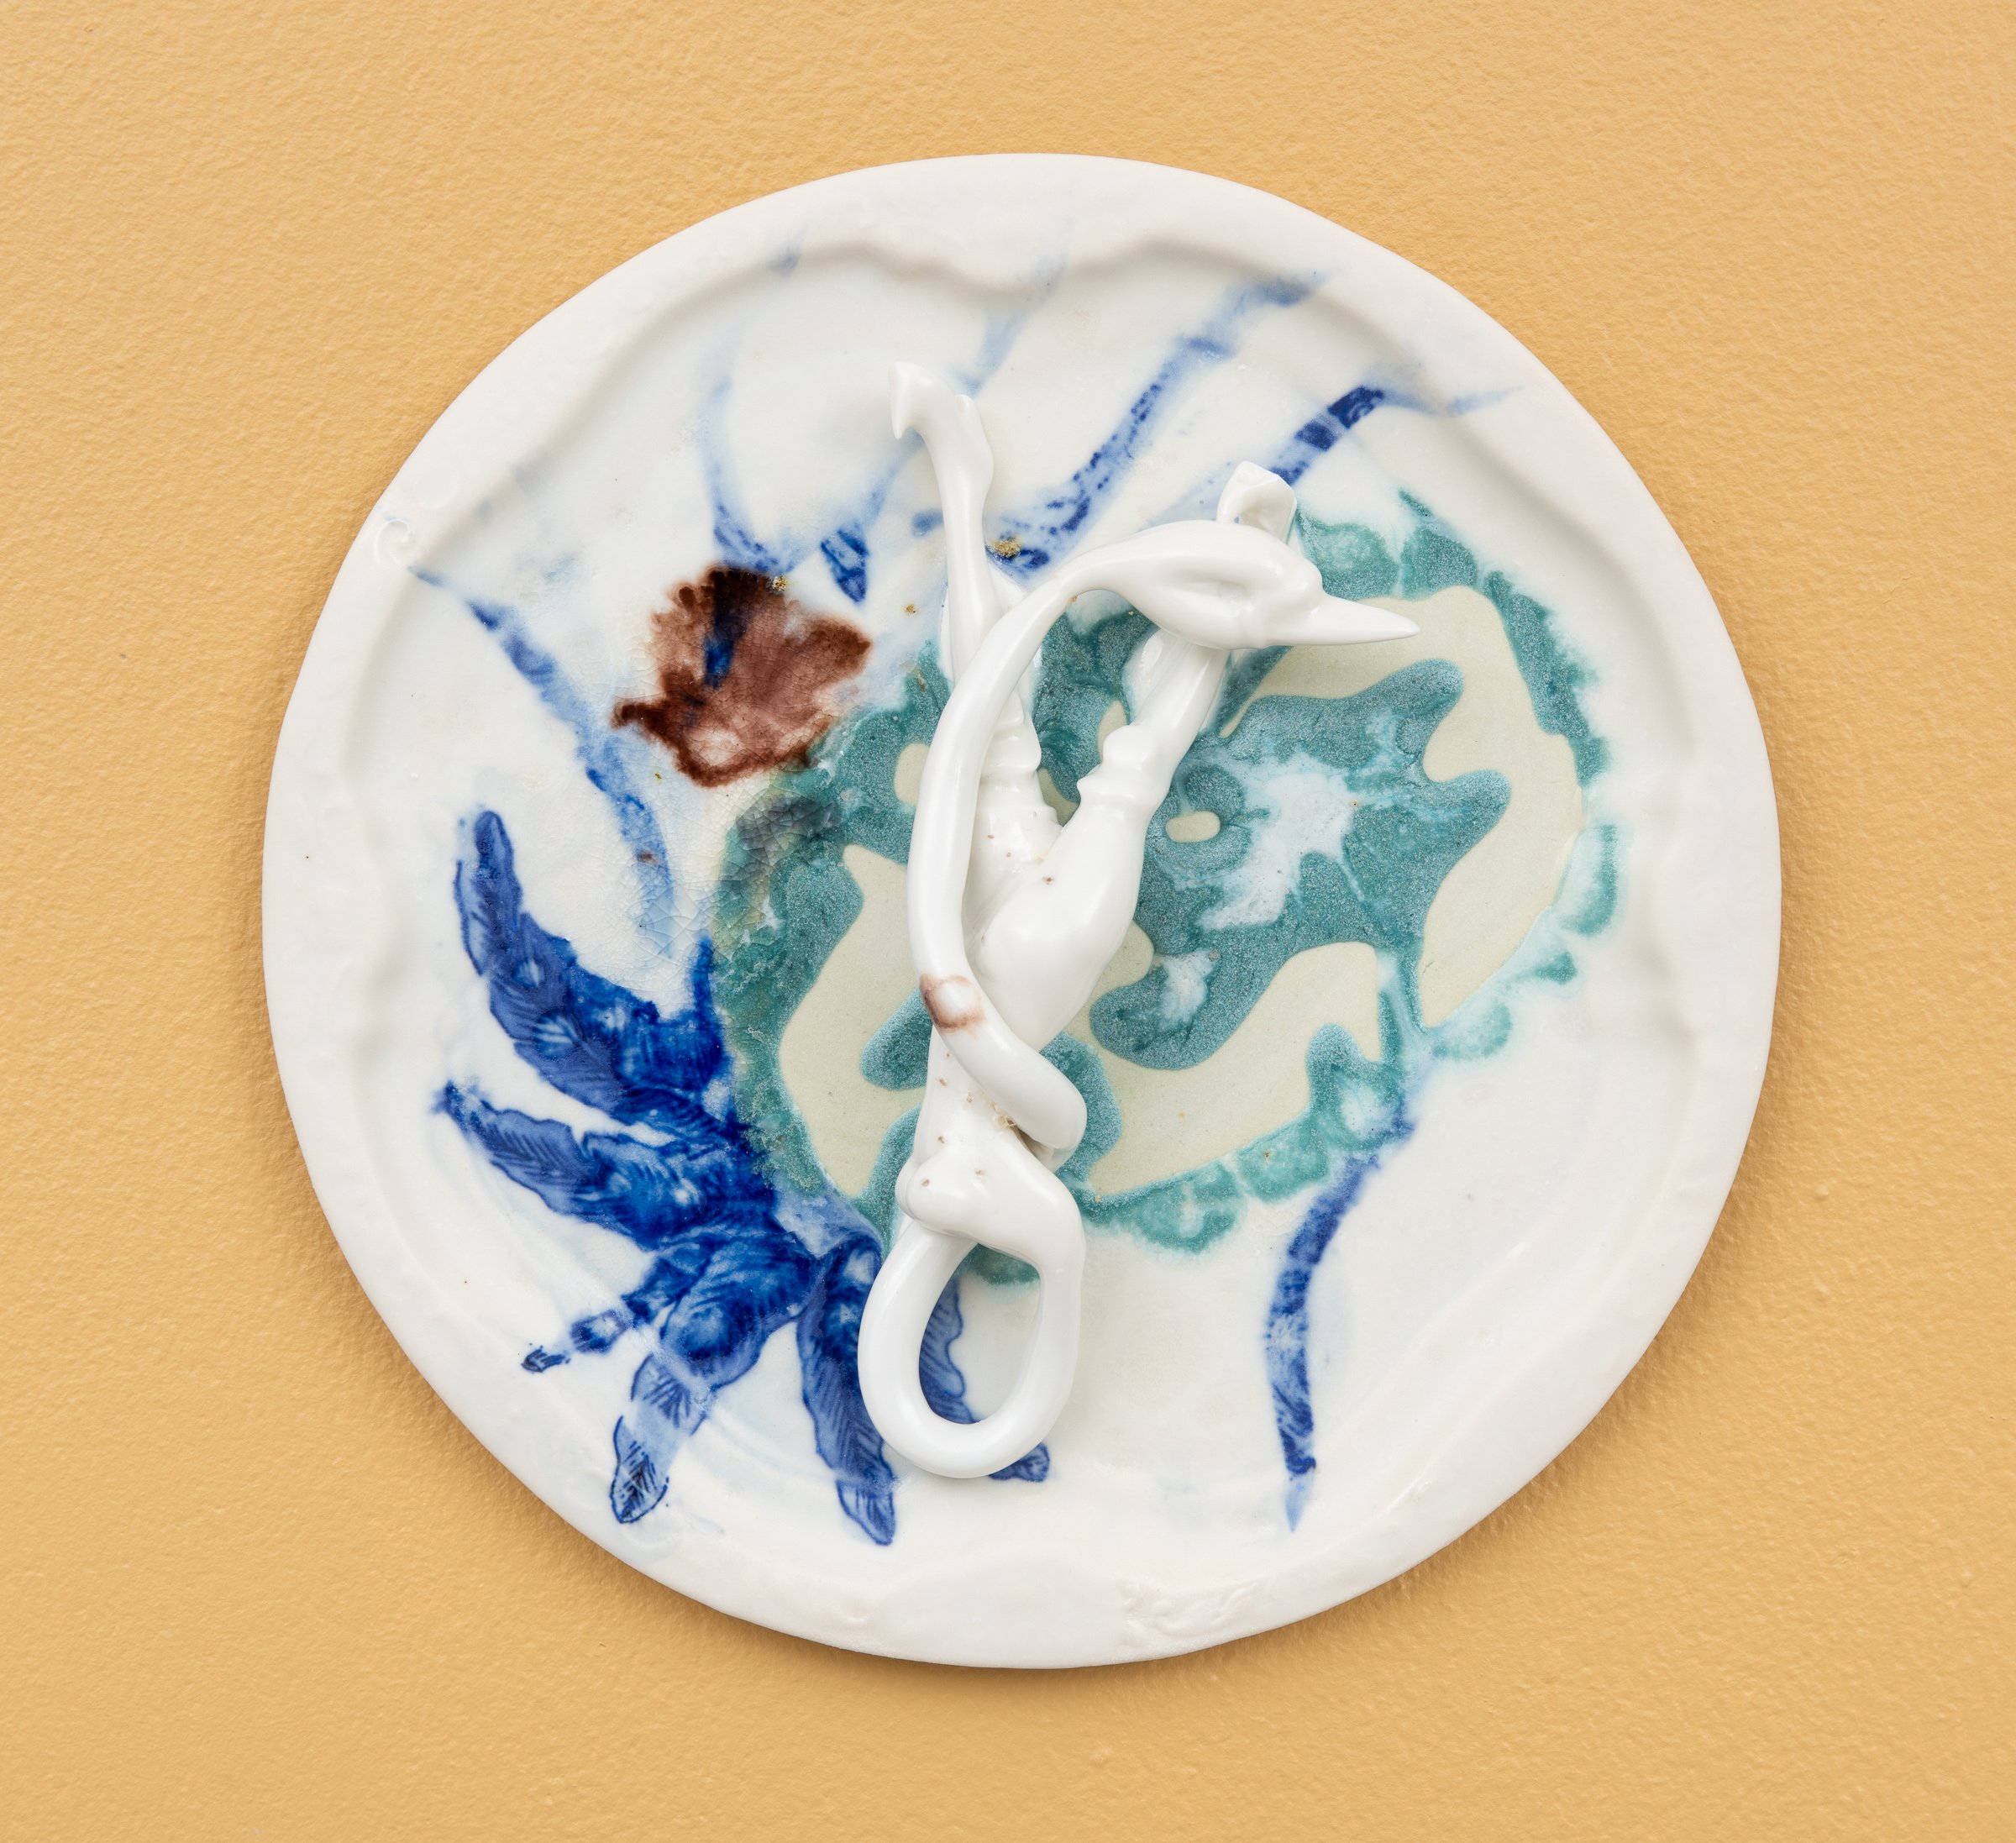  Why do Europeans put plates on their walls? VII | 2022  Porcelain, glazes, porcelain decals and tissue paper, press molding. 27x27x4  Photo: Thomas Tveter 